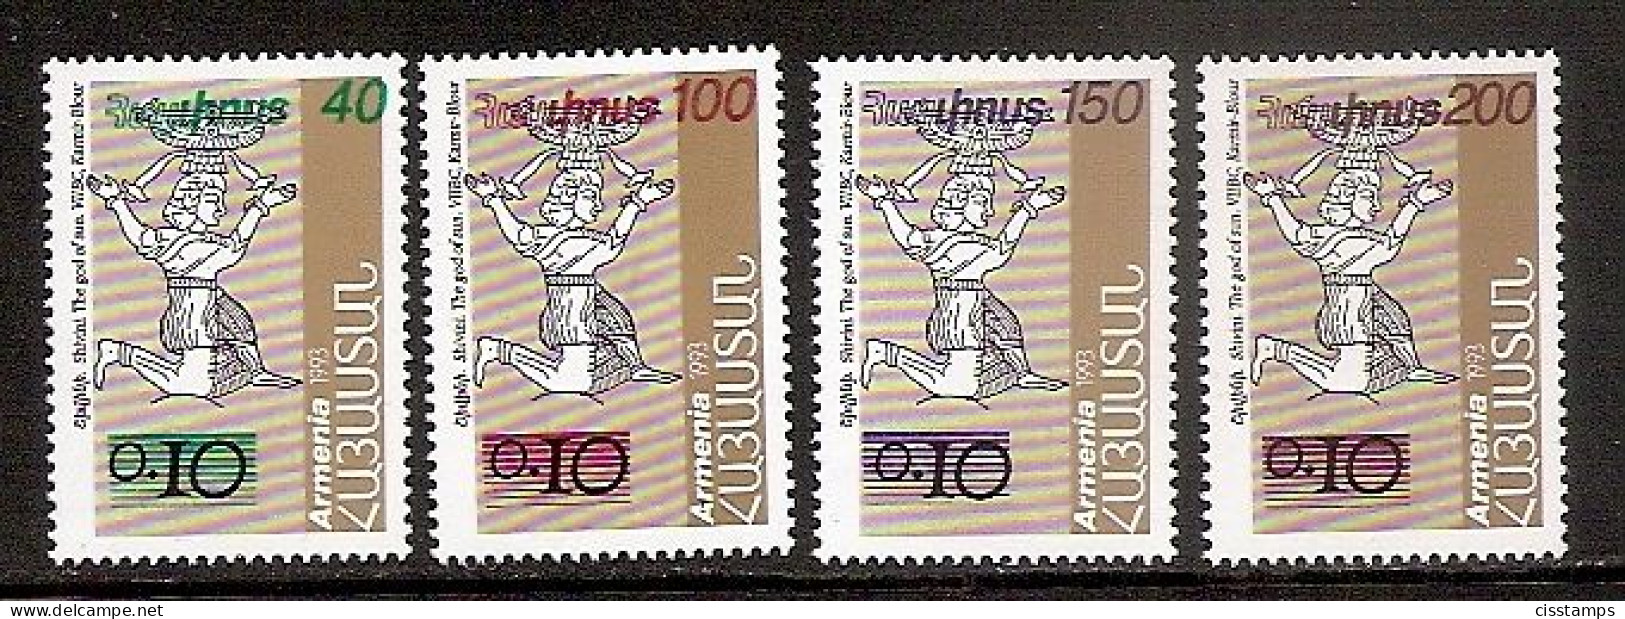 ARMENIA 1996●Definitives Surcharges●Mi276-79 MNH - Arménie